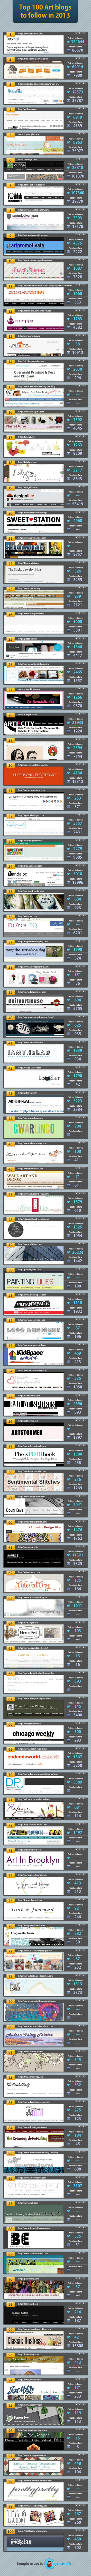 Top 100 art blogs to follow in 2013